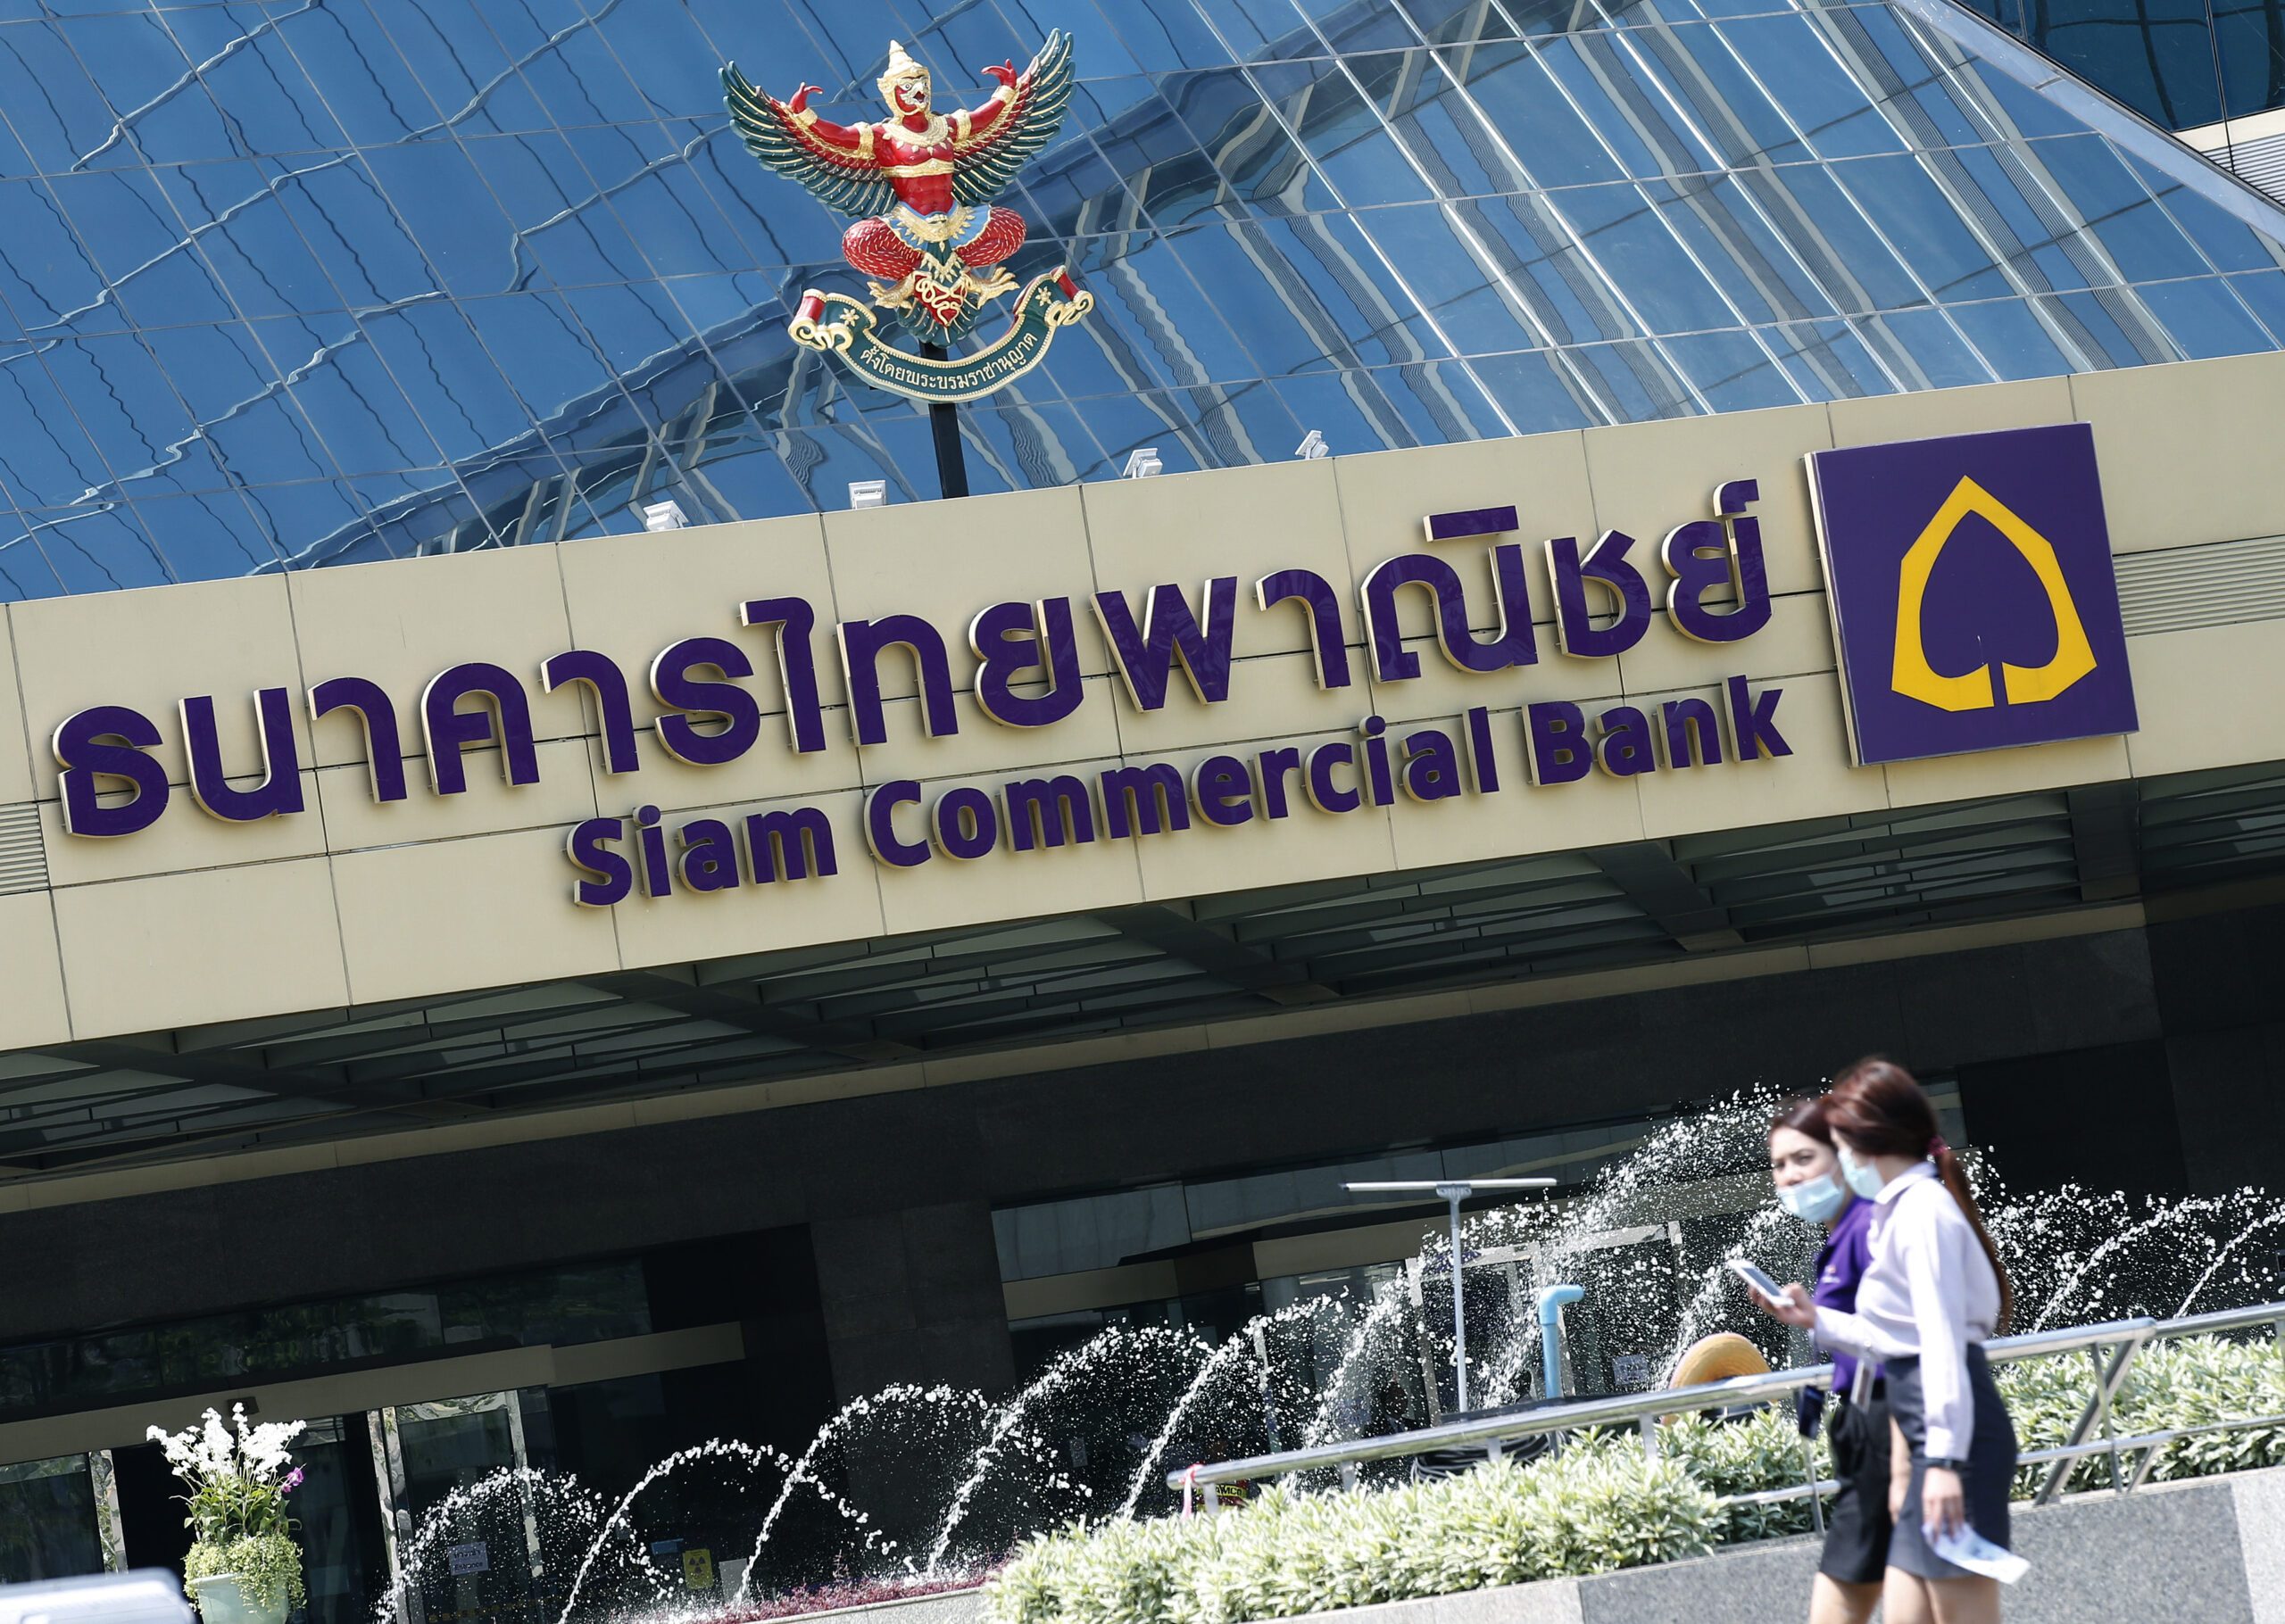 Chemical fire extinguisher leak kills 8 in Thai bank